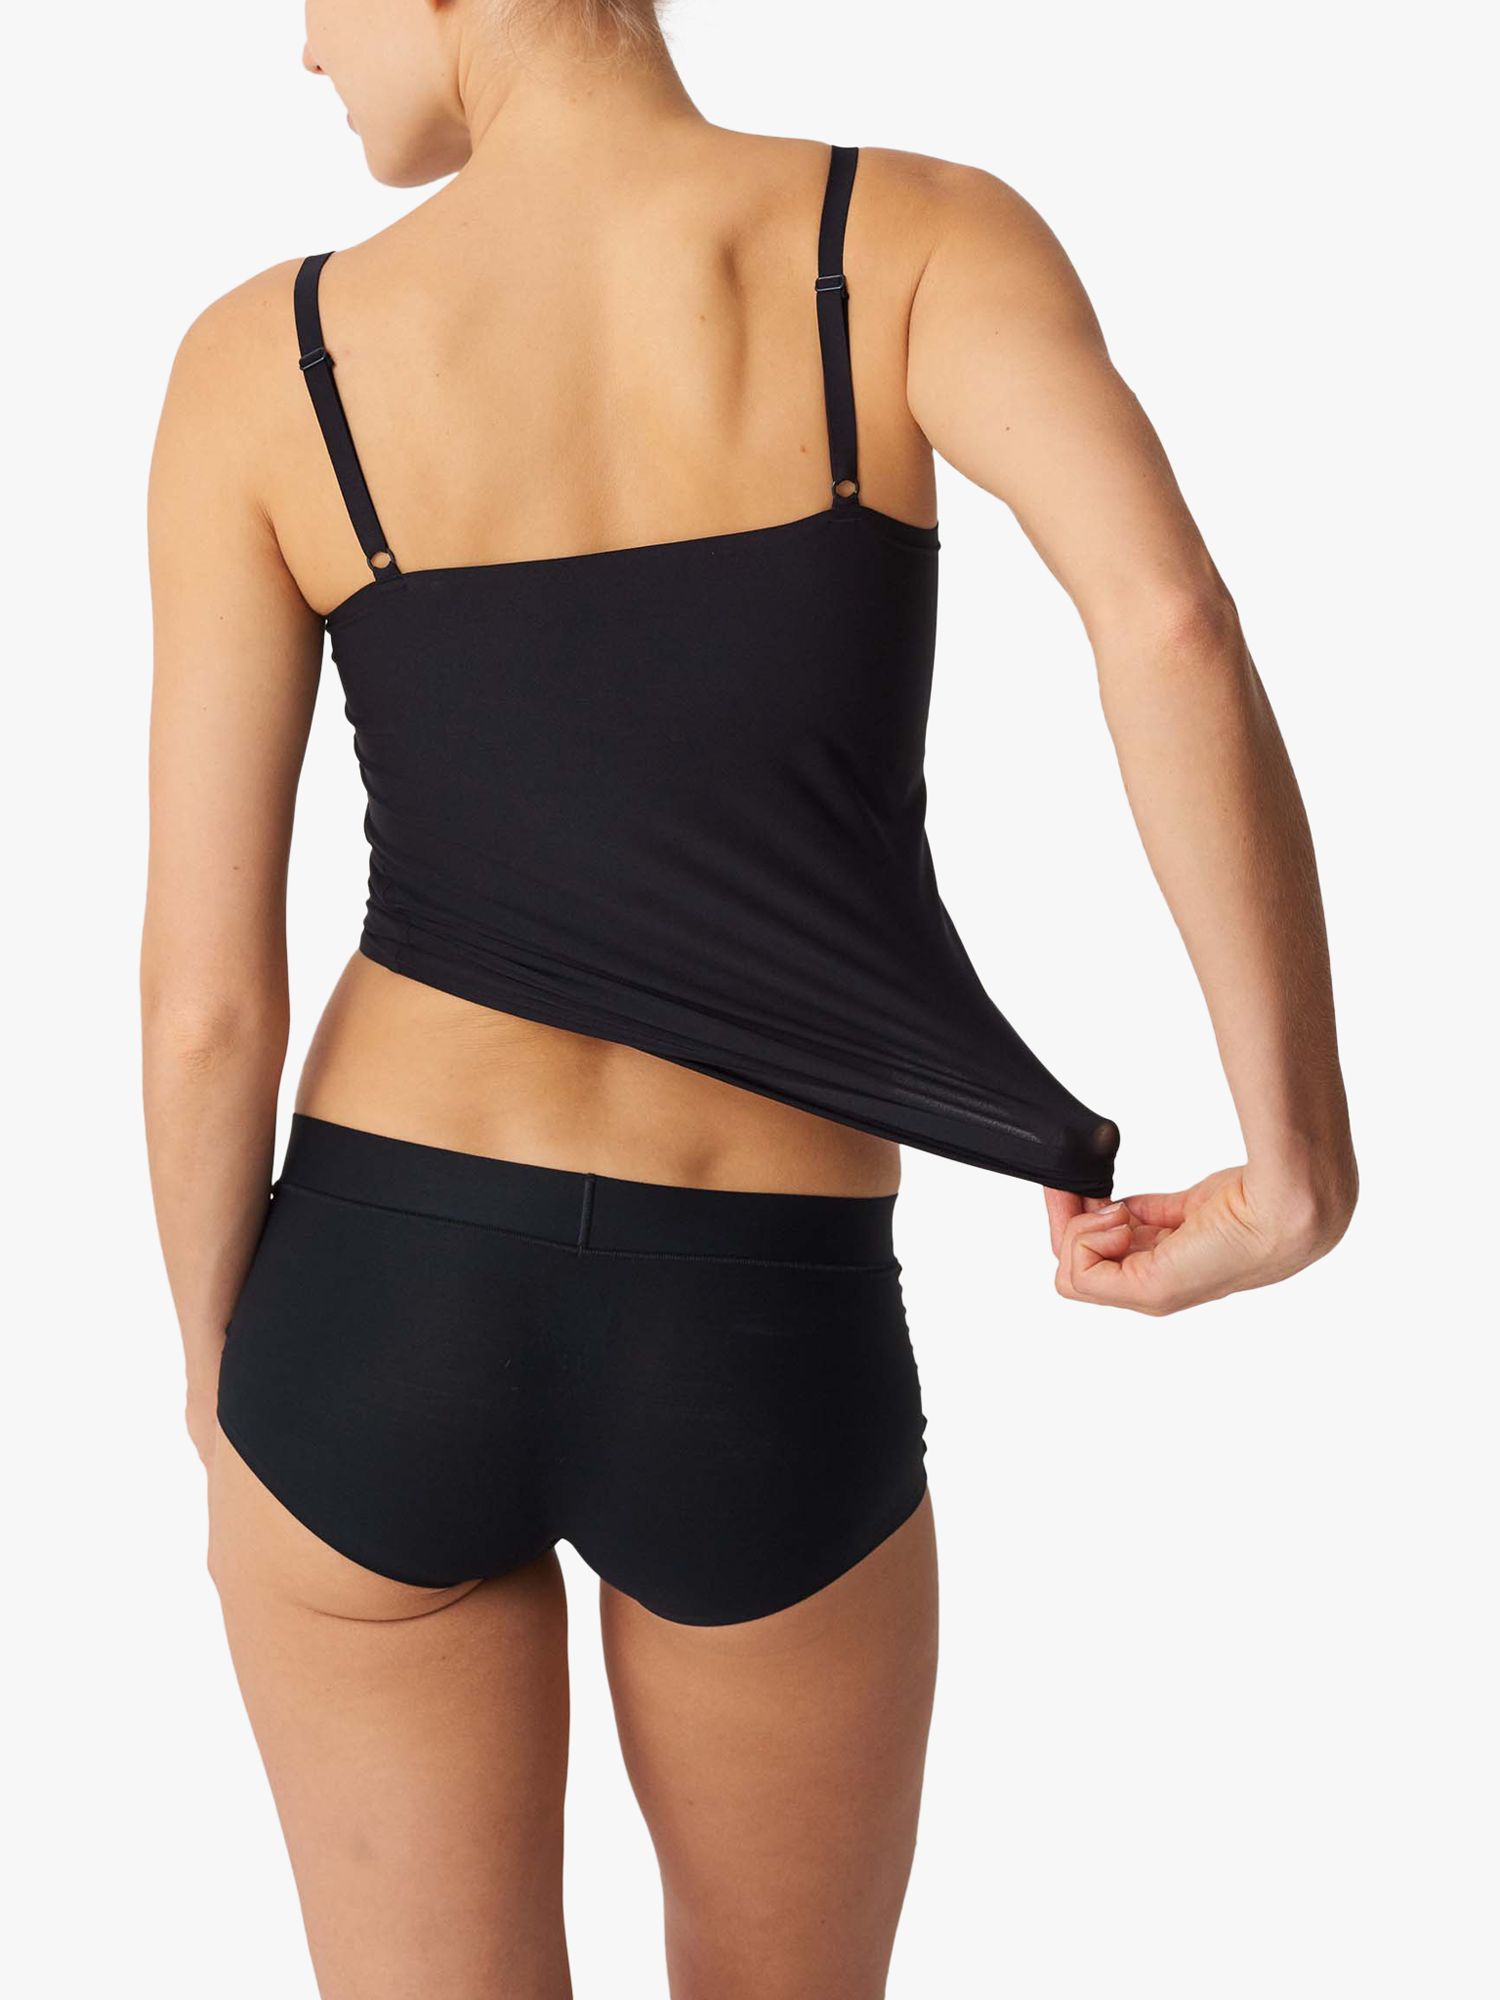 viuma Women's 2-Pack Slim-Fit Camisoles Adjustable Strap Cotton Top  Undershirt Tummy Control Black : : Fashion